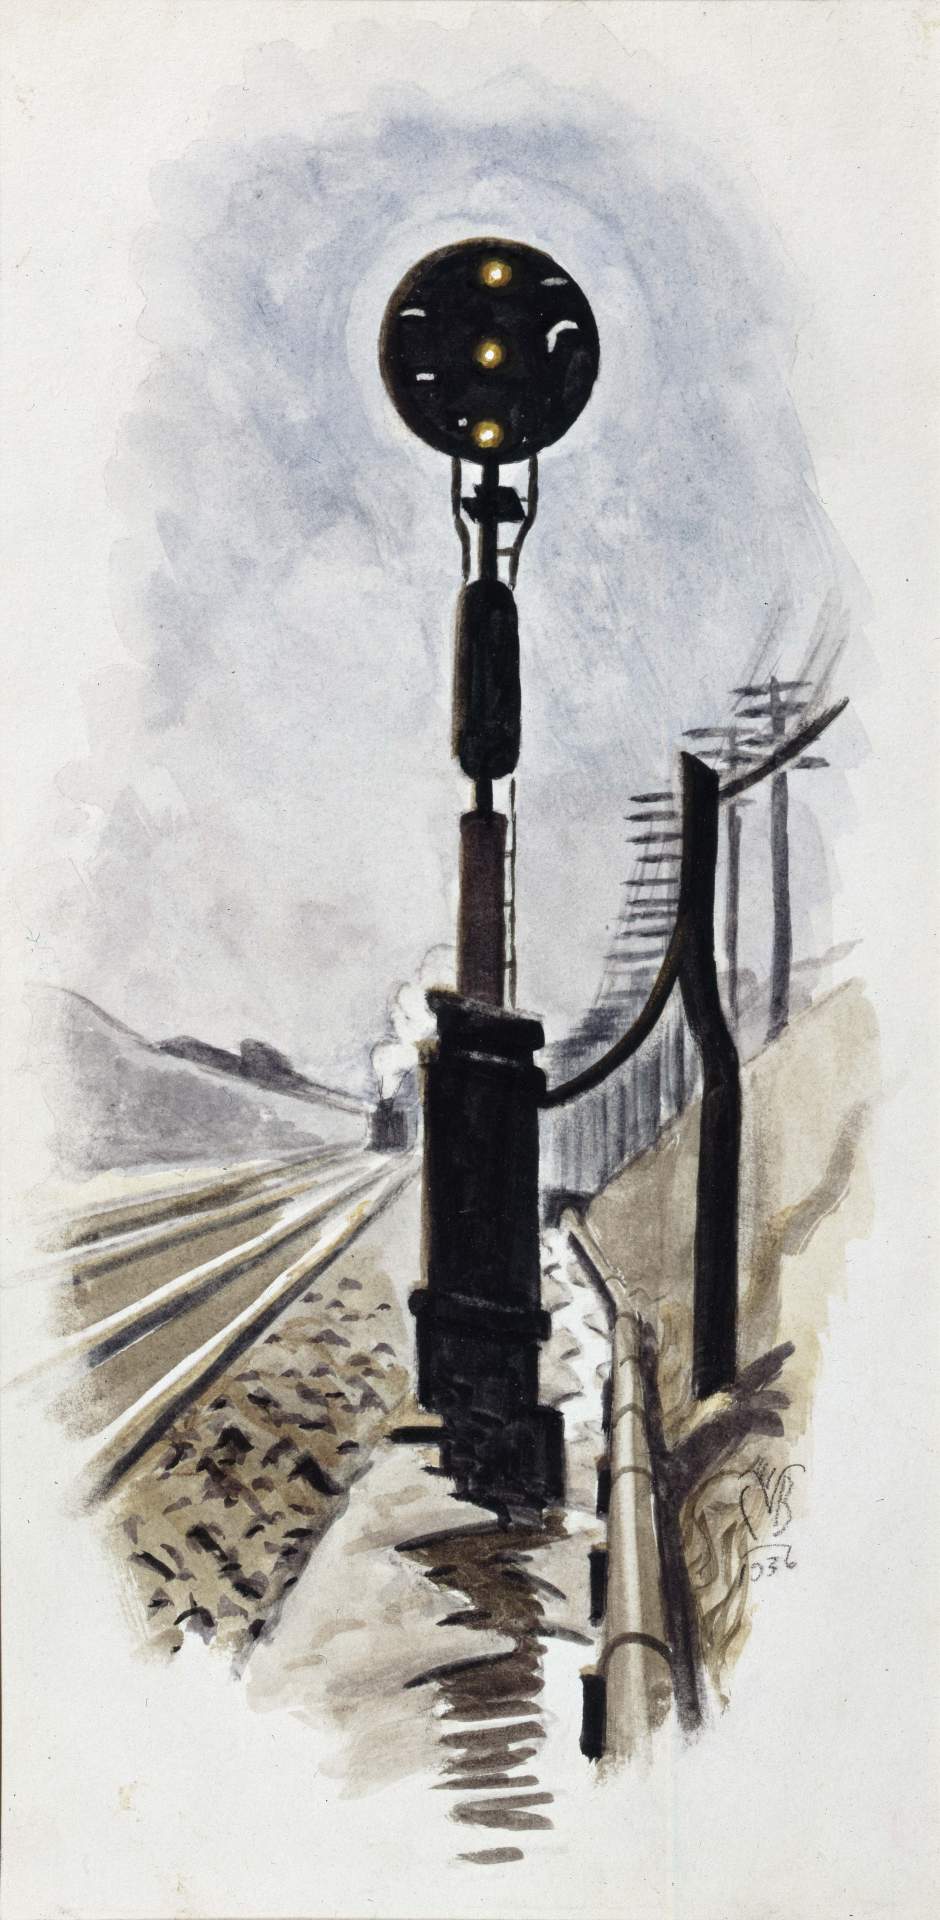 Railroad Signal and Tracks